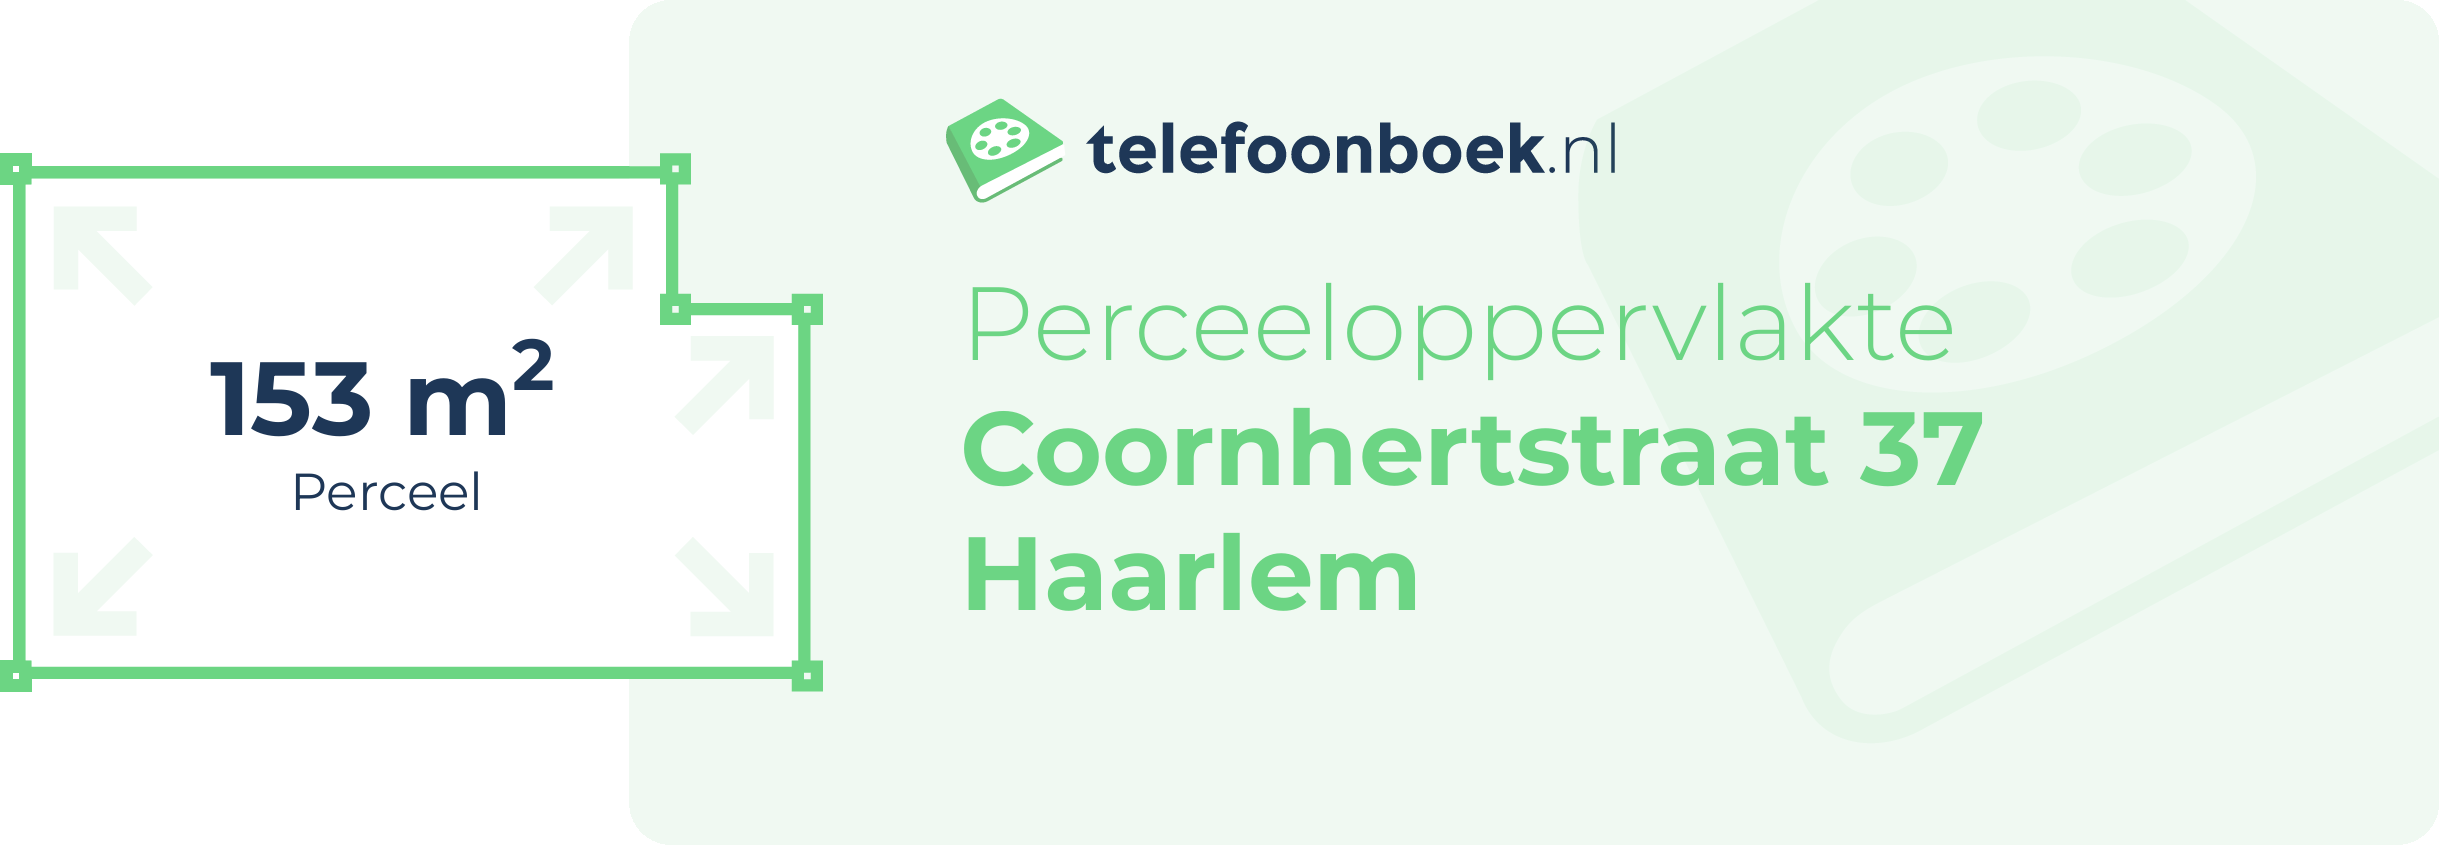 Perceeloppervlakte Coornhertstraat 37 Haarlem